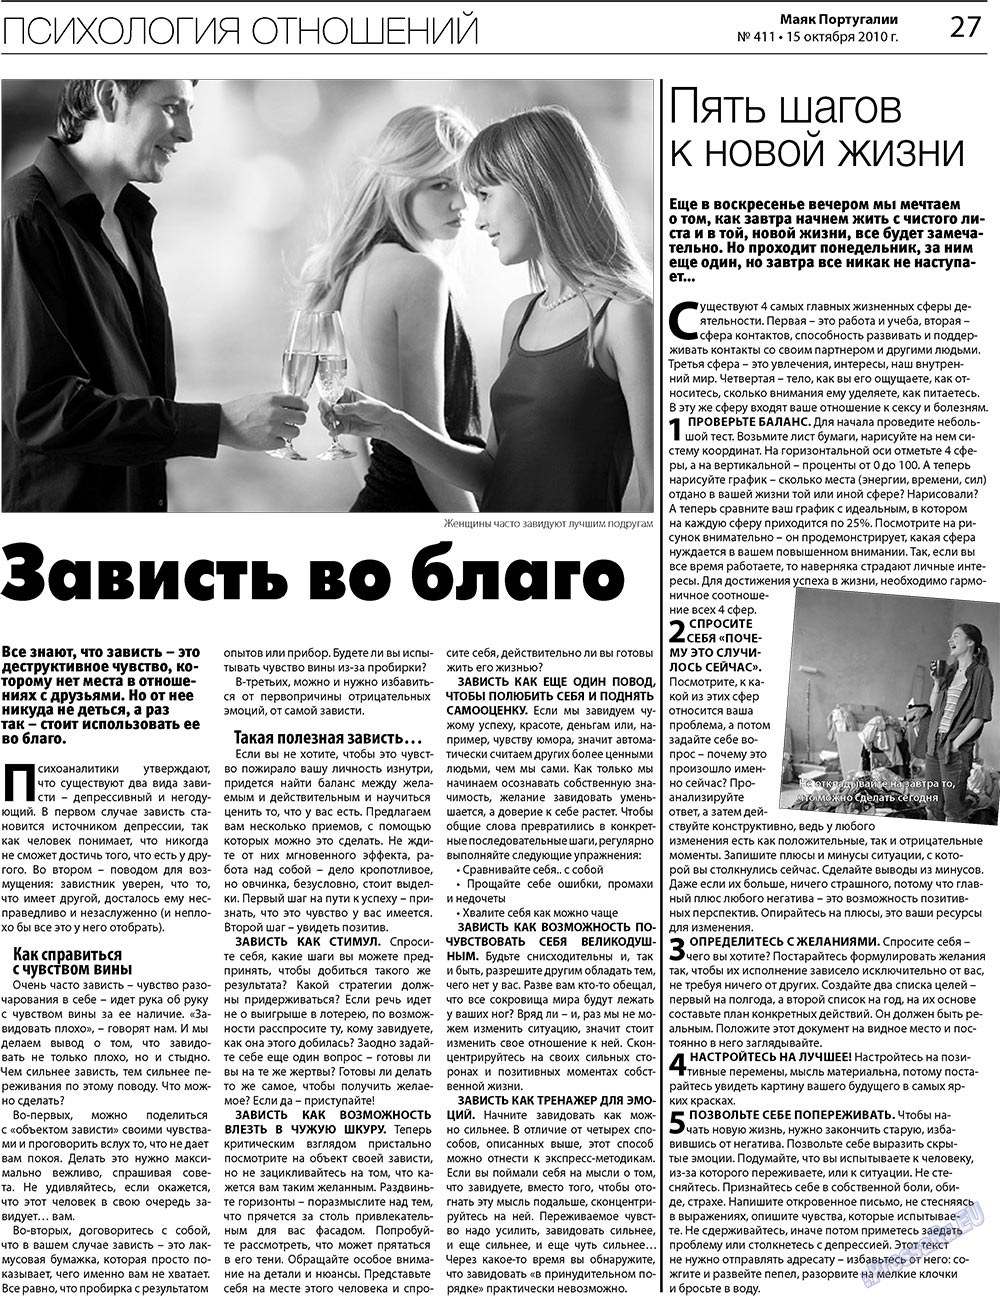 Маяк Португалии, газета. 2010 №411 стр.27